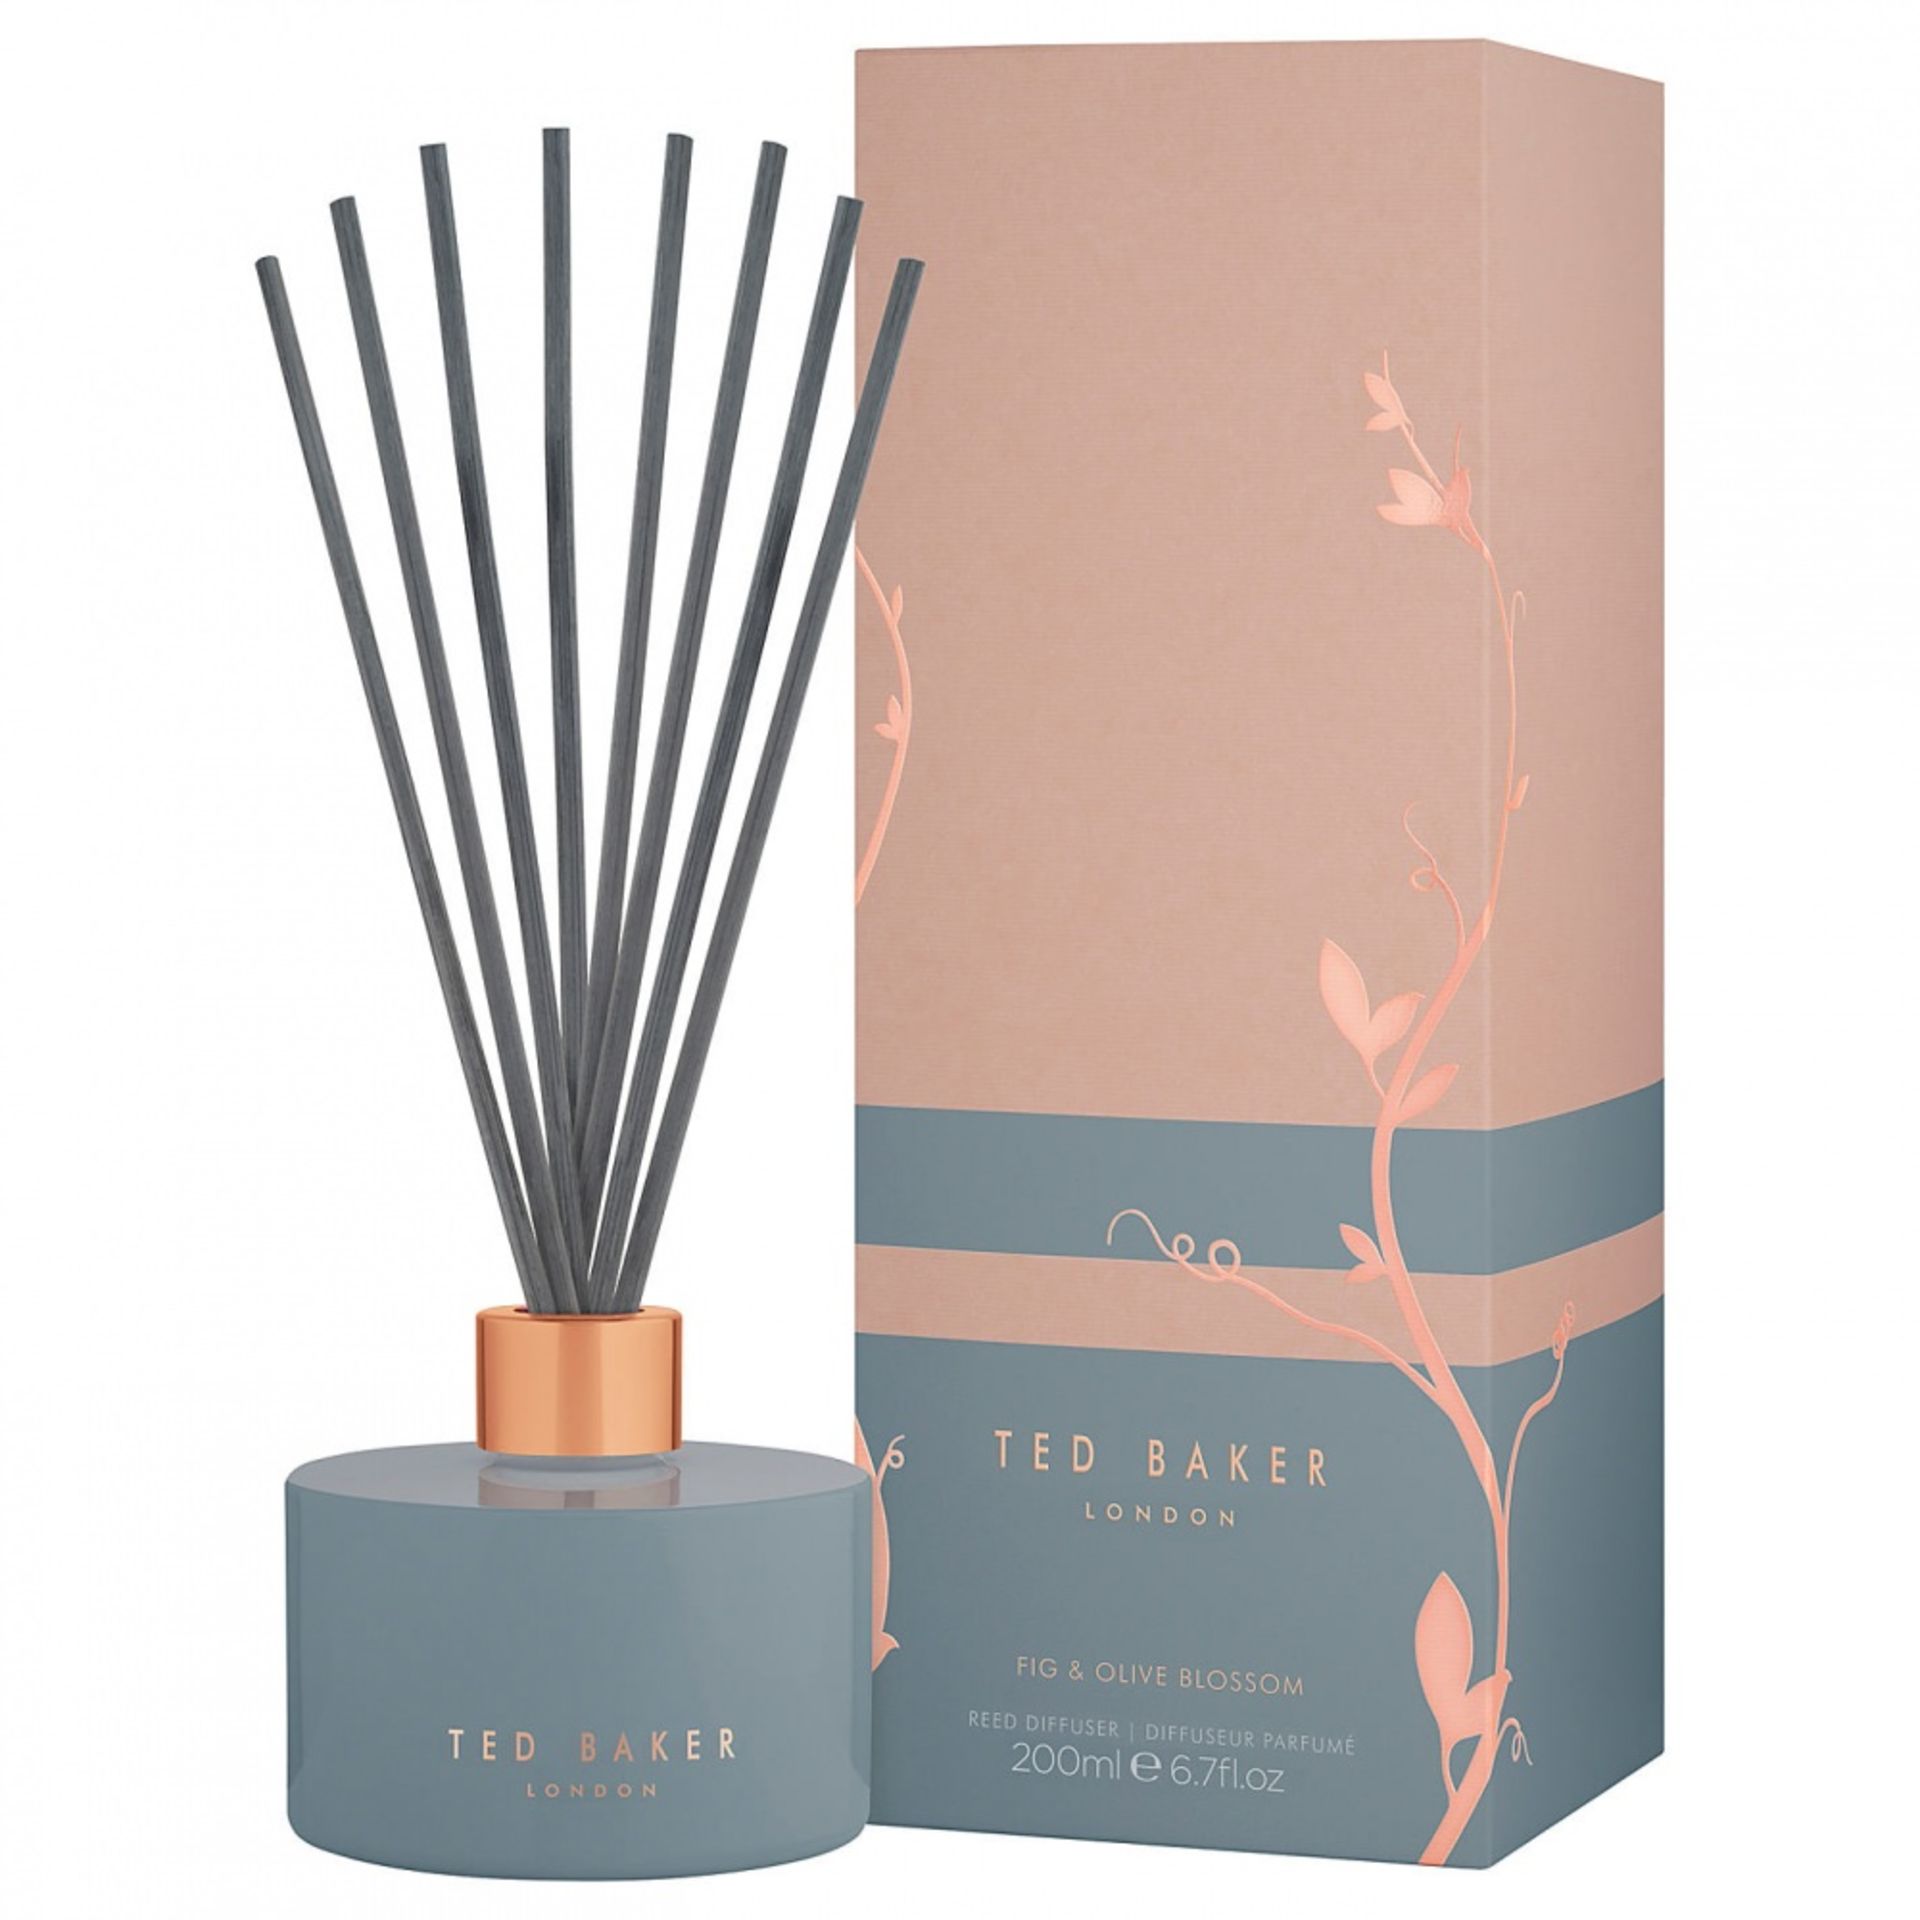 V Brand New Ted Baker Fig & Olive Blossom Reed Diffuser - ISP £34 (John Lewis)